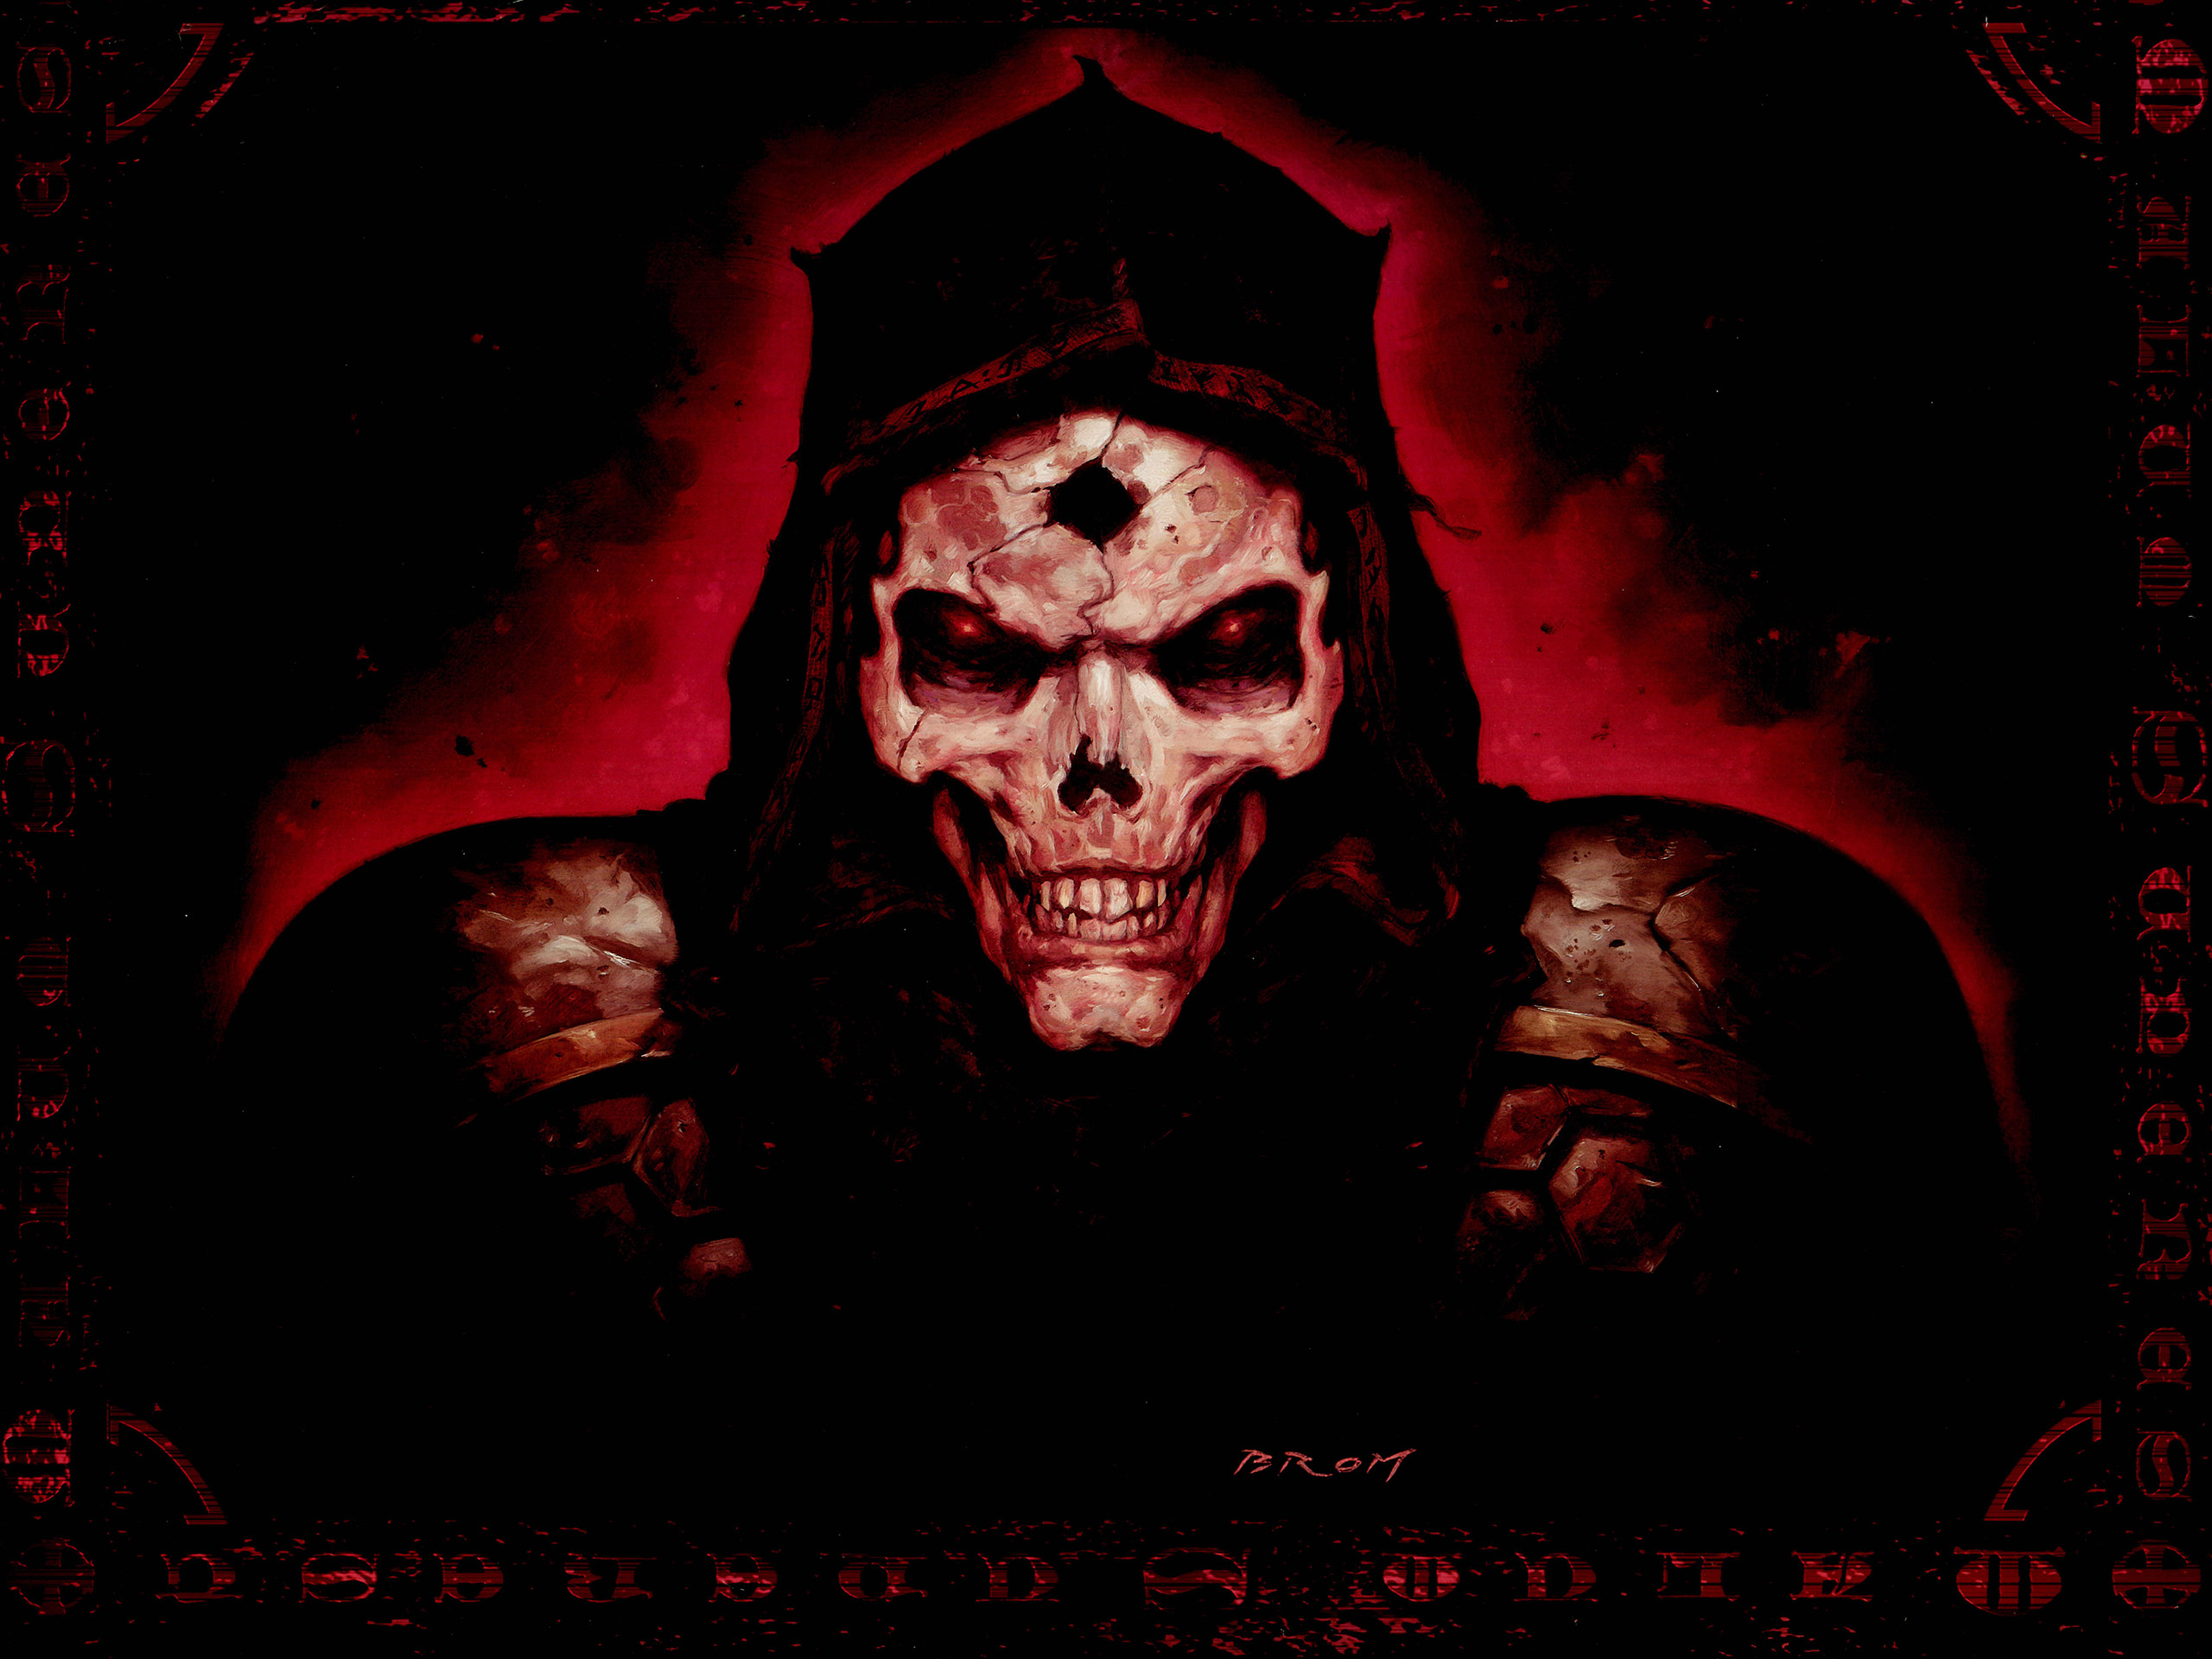 2560x1920 Diablo 2 Quake fantasy art dark horror skull evil scary spooky creepy face eyes  wallpaper |  | 32172 | WallpaperUP